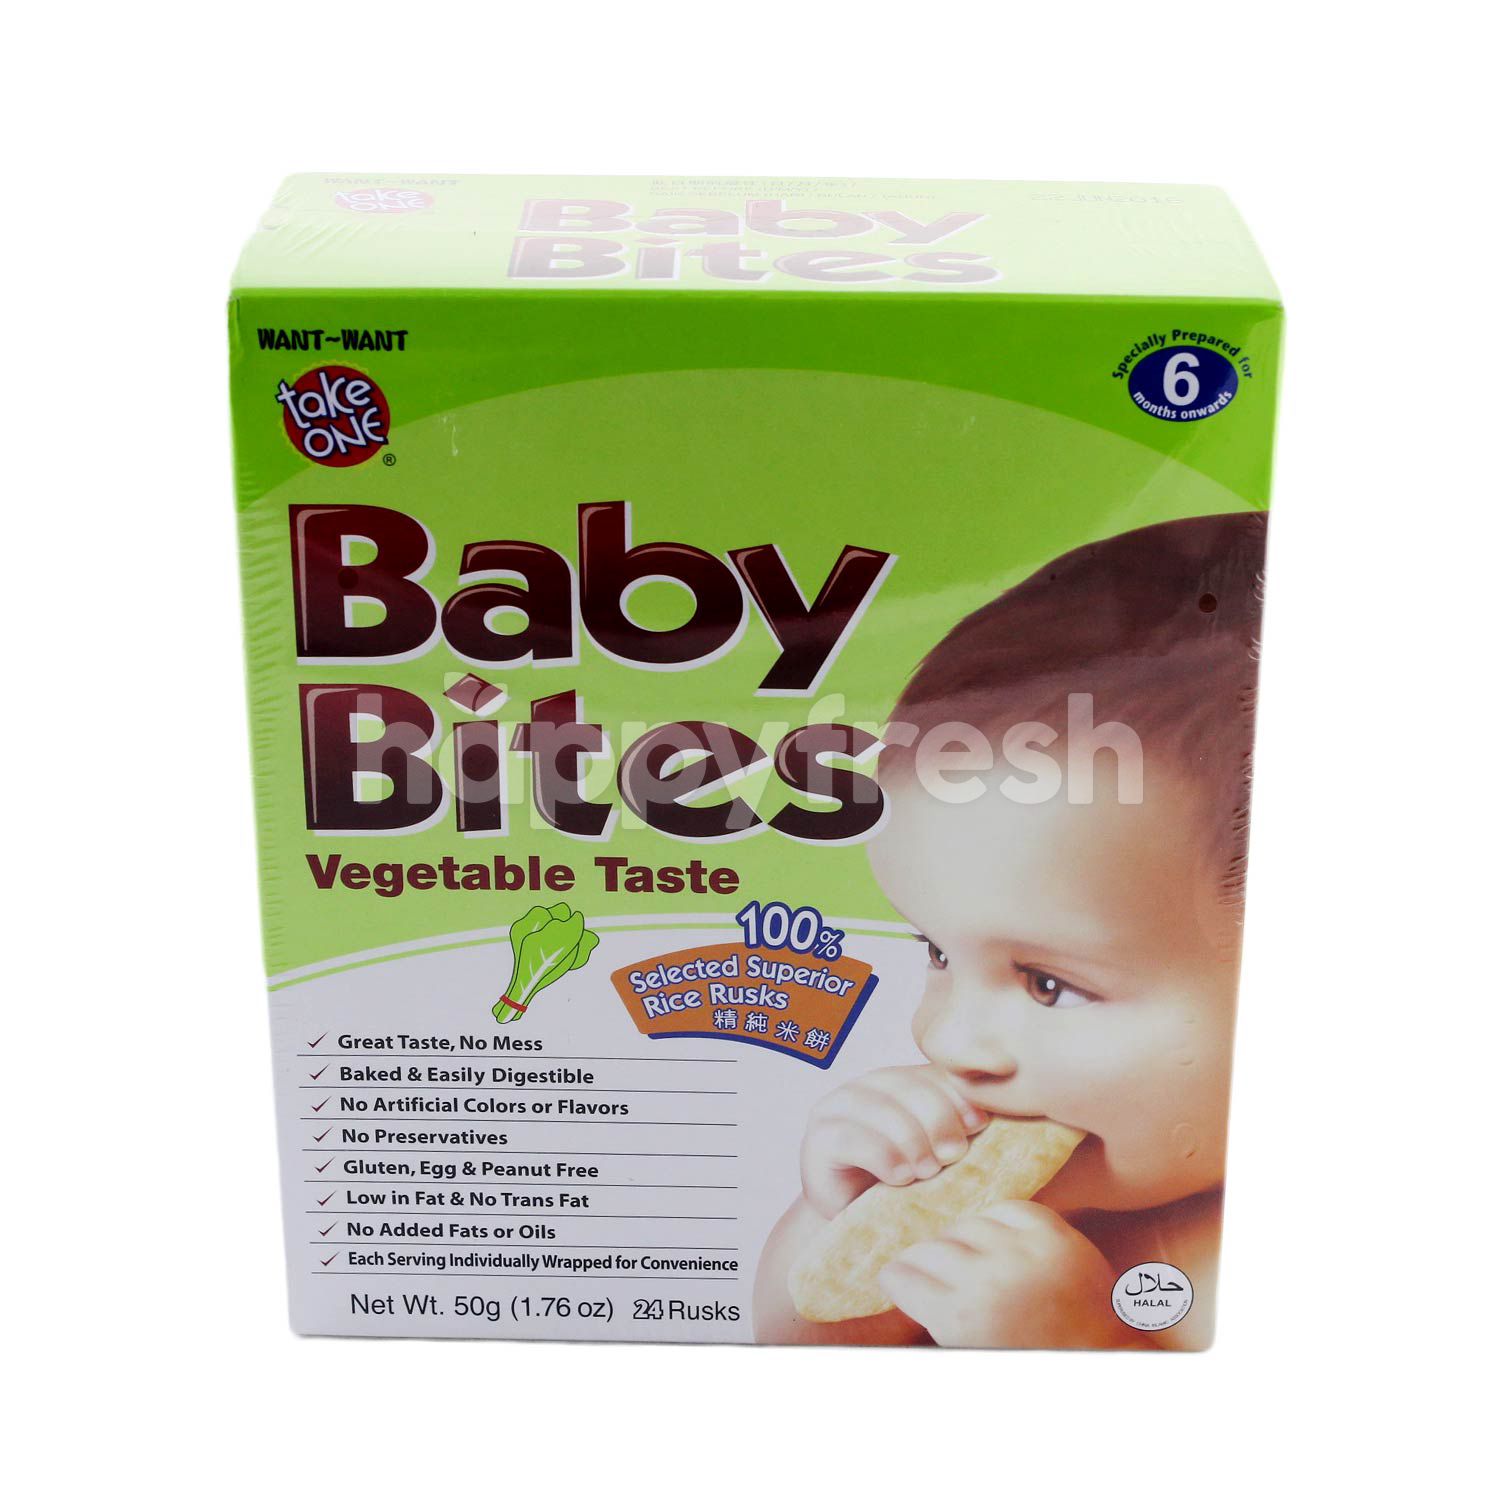 Beli WANT WANT Take One Baby Bites Vegetable Taste dari Cold Storage ...